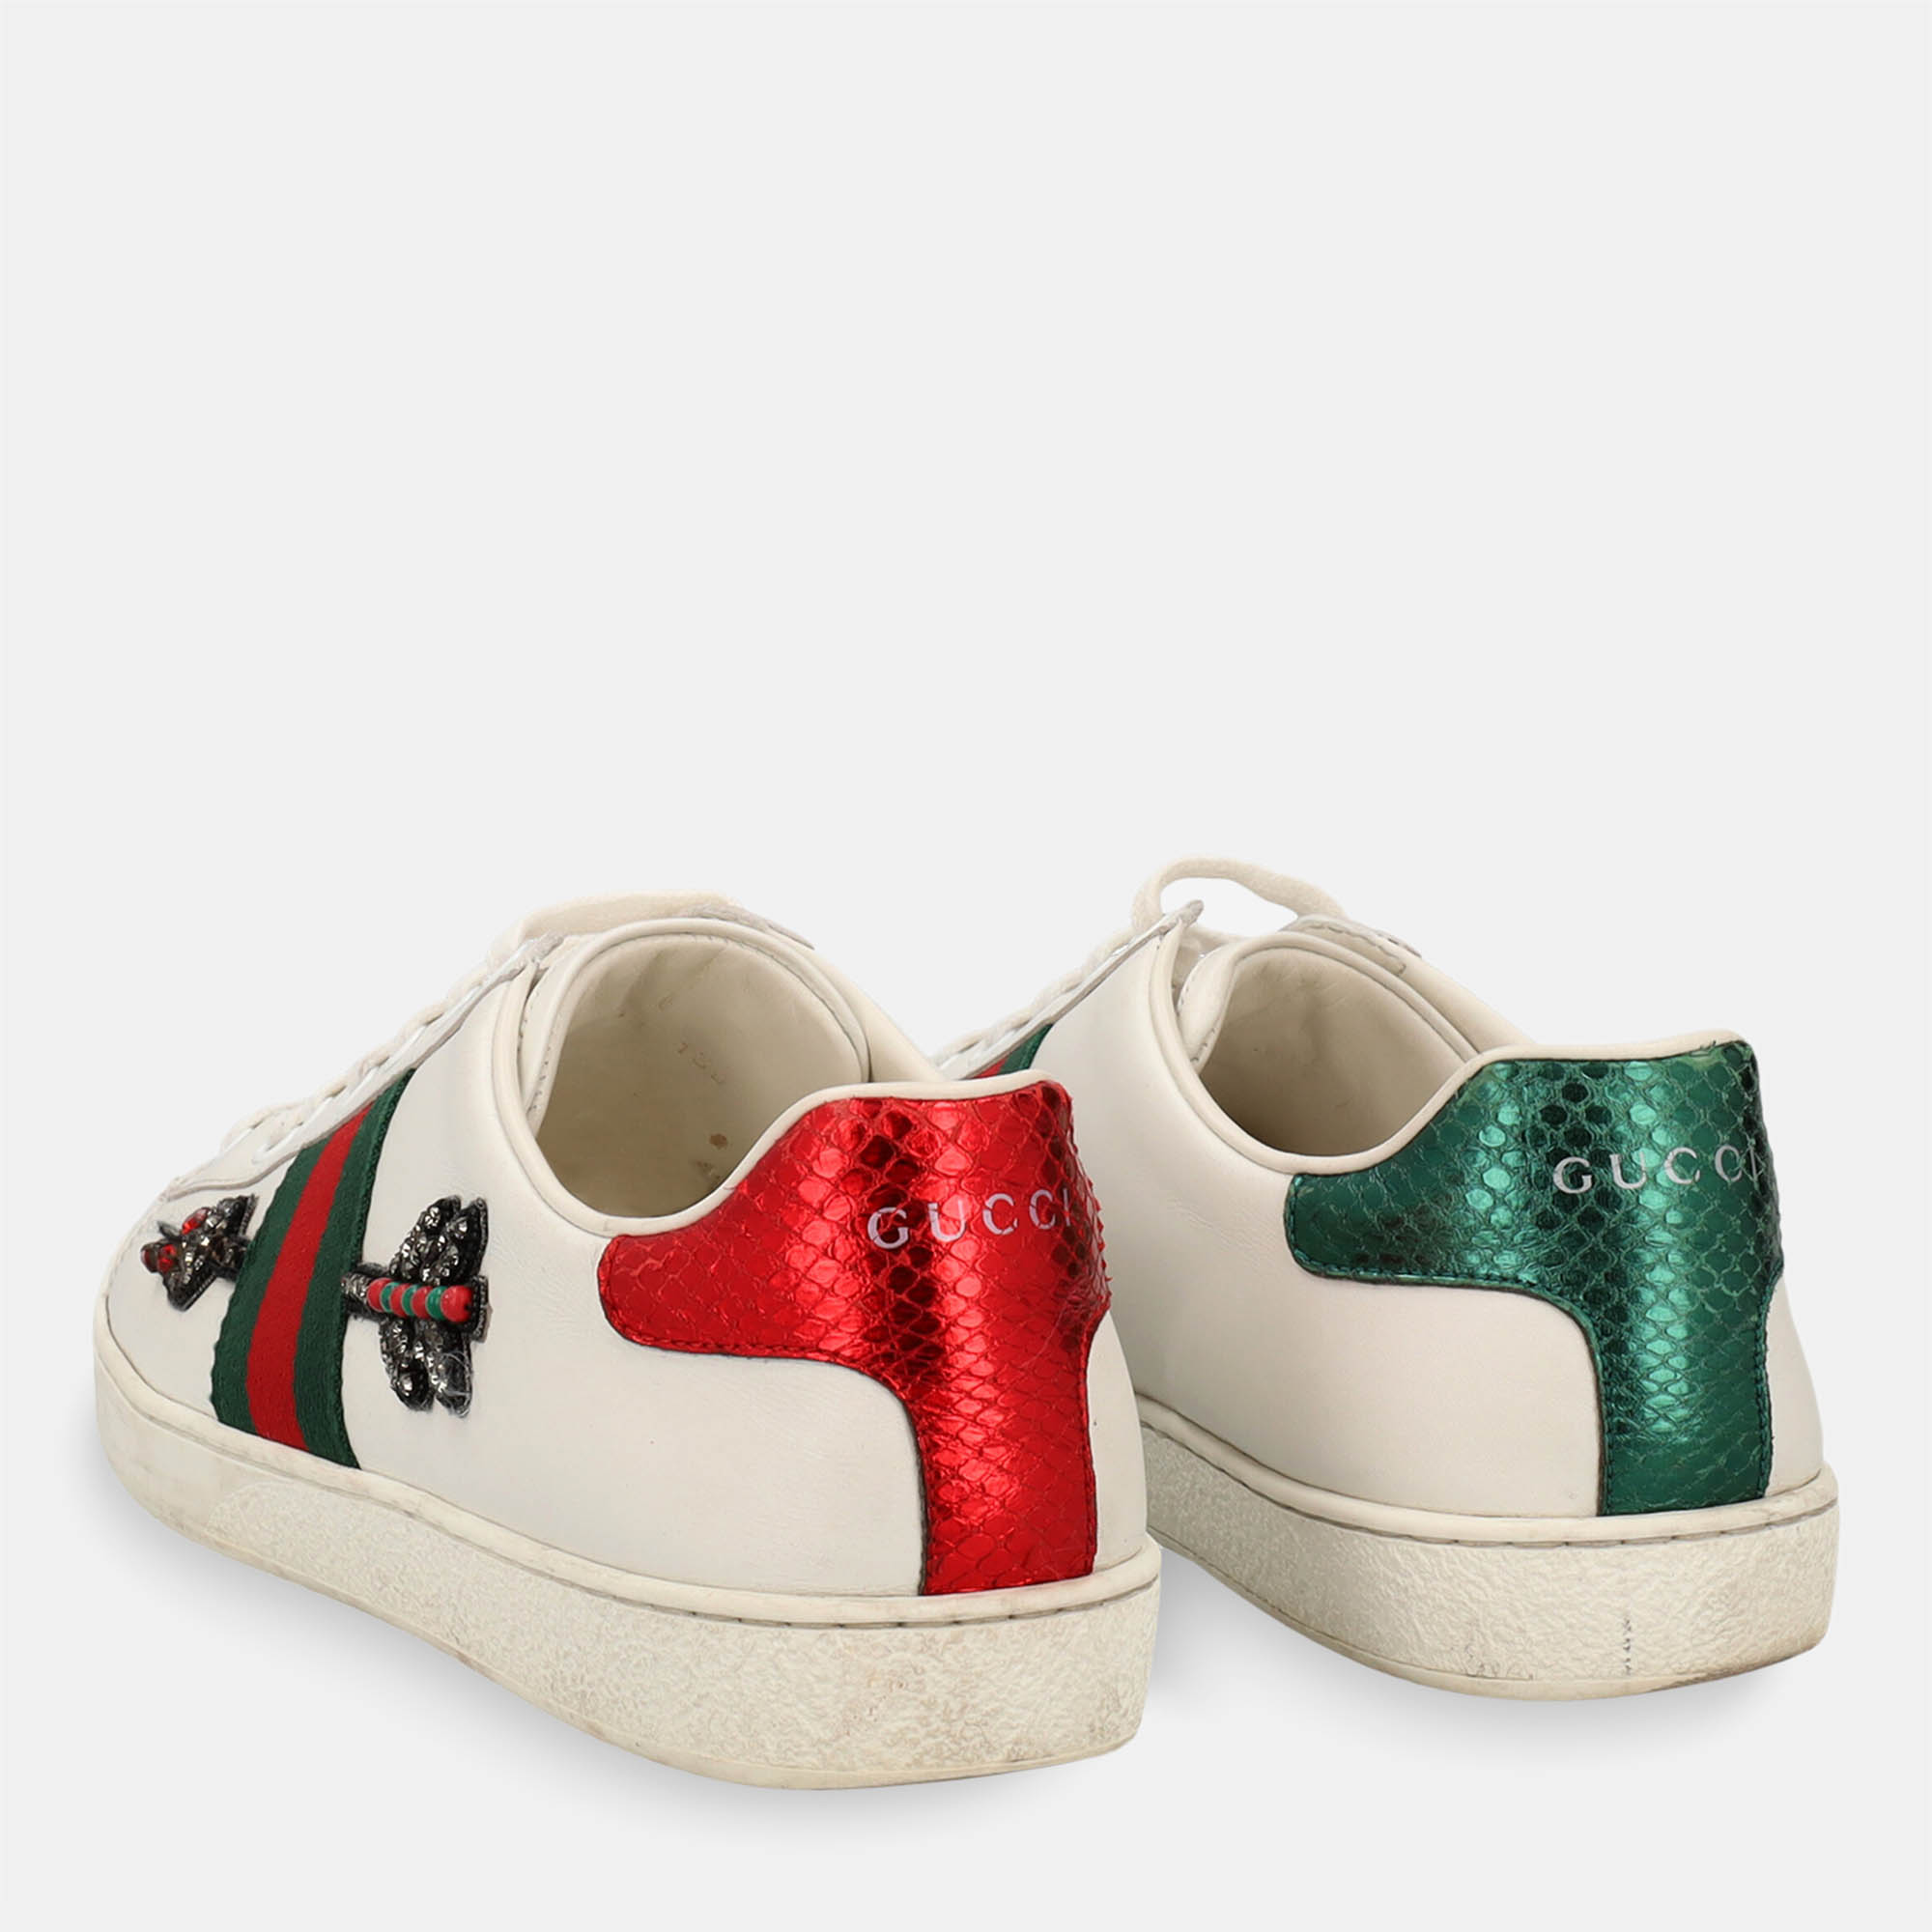 Gucci  Women's Leather Sneakers - Green - EU 39.5